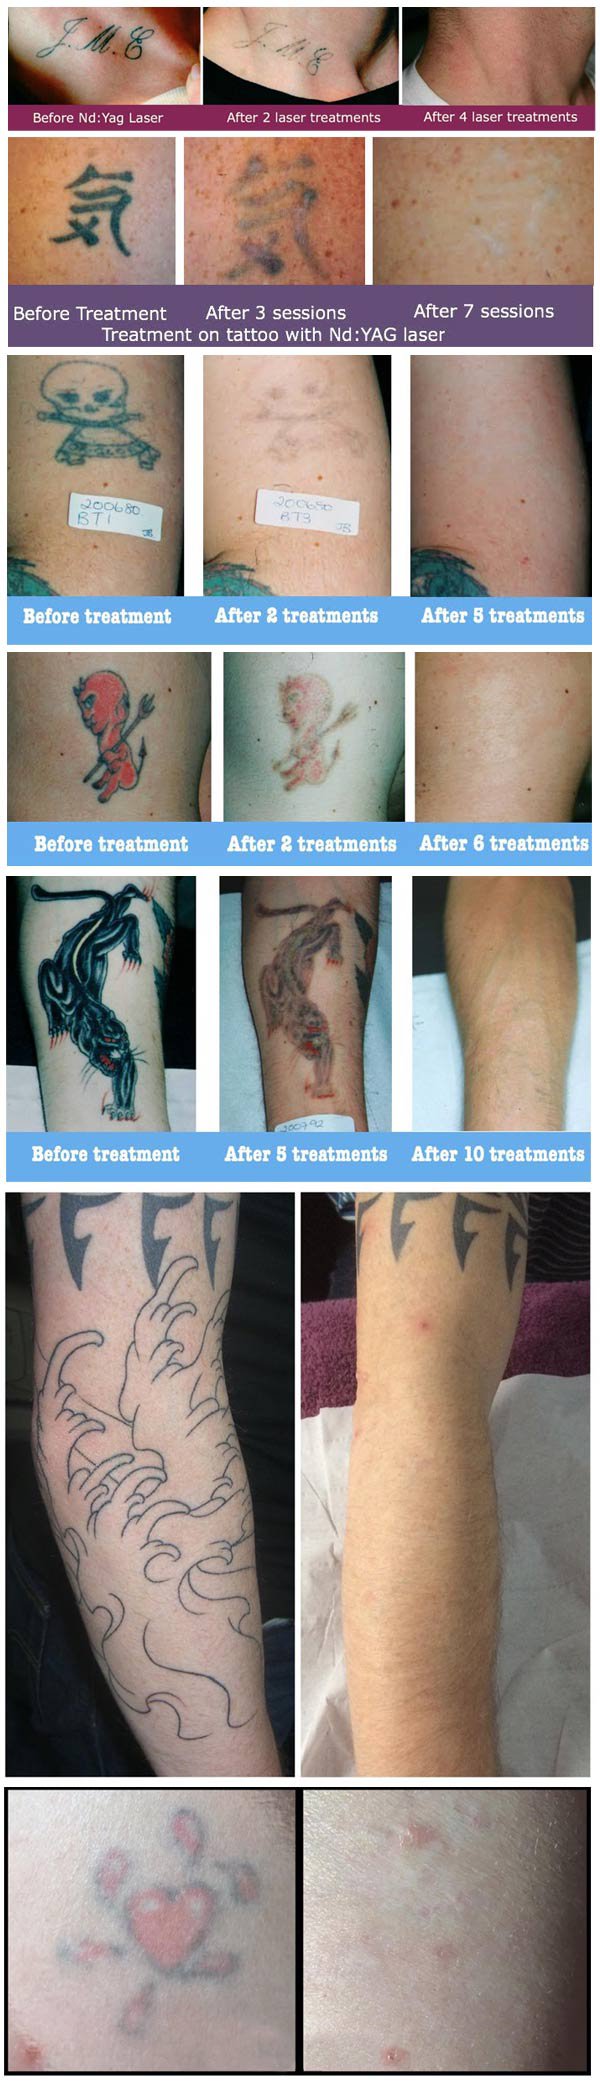 Dr Zeynep Kirker Medical Esthetic Policlinic Tattoo Removal